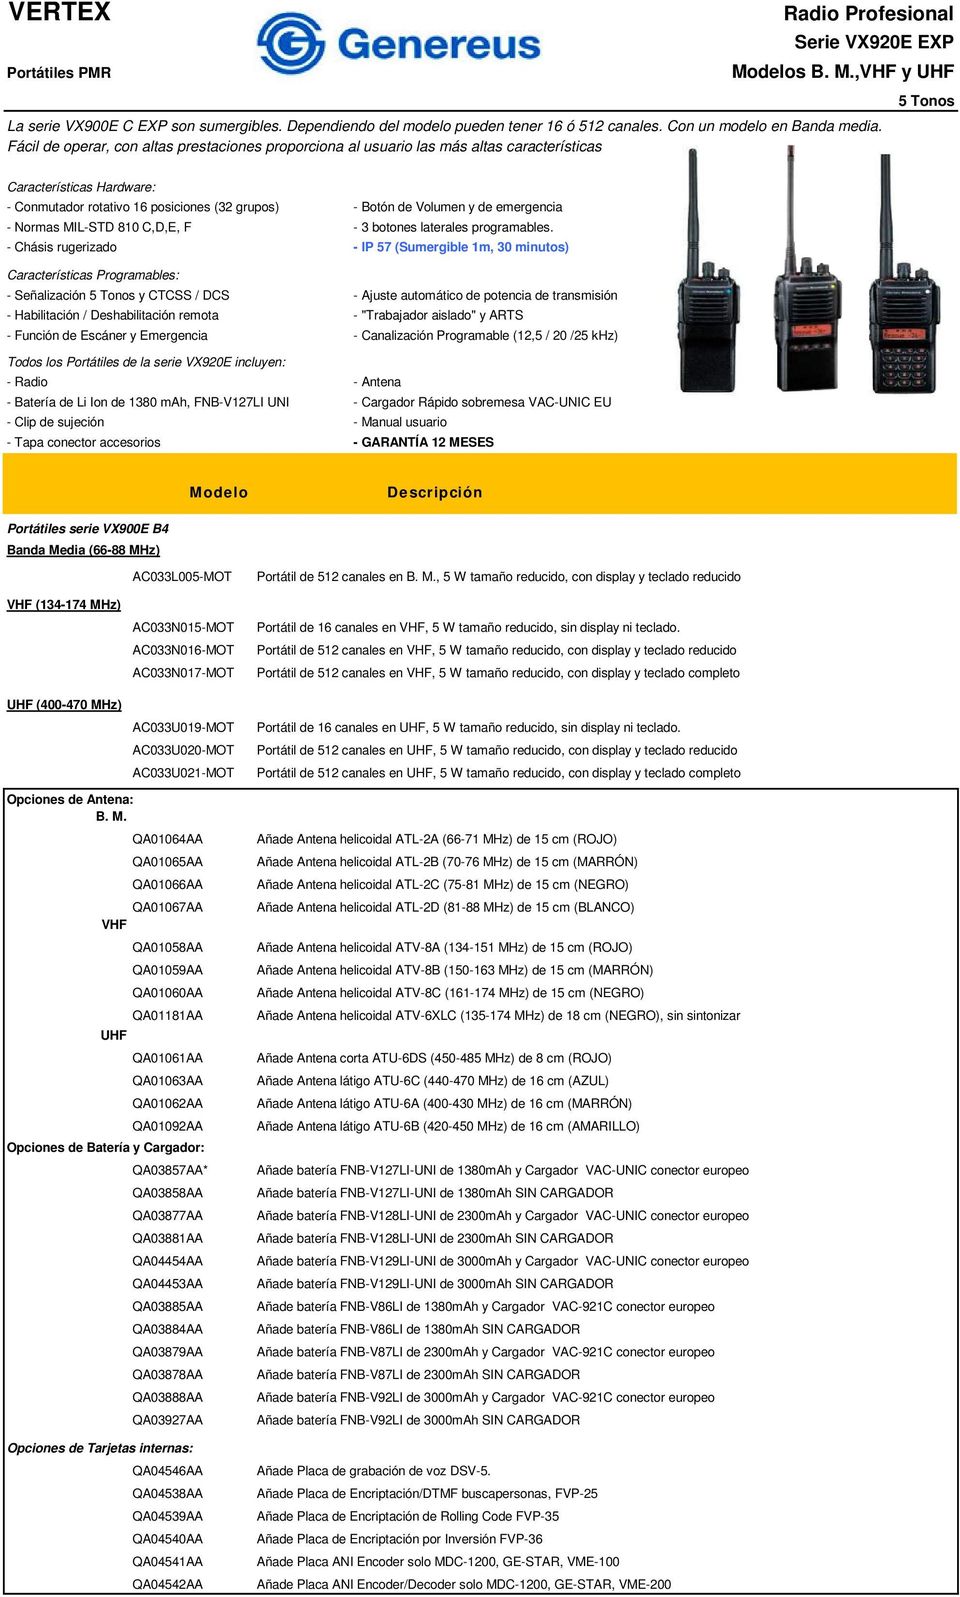 emergencia - Normas MIL-STD 810 C,D,E, F - 3 botones laterales programables.